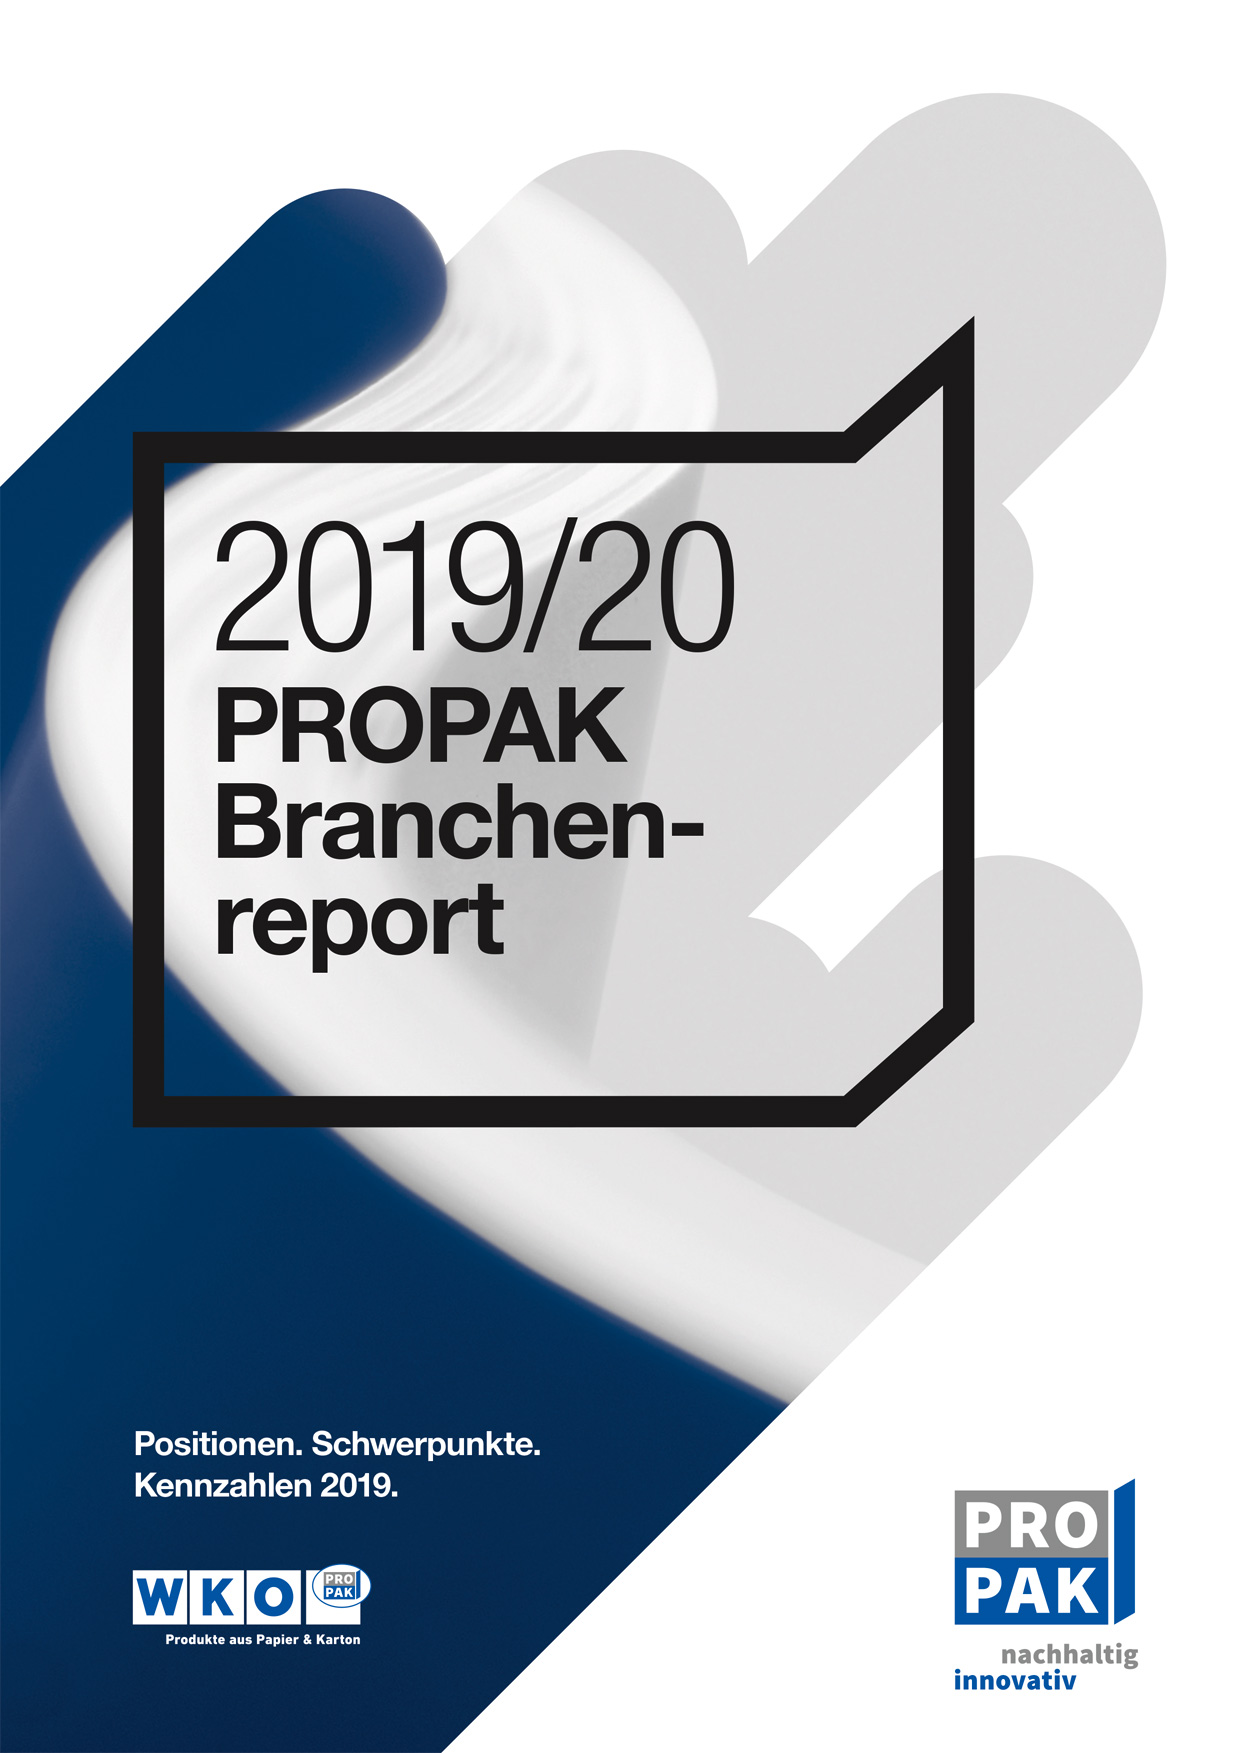 Propak Branchenreport 2019/20